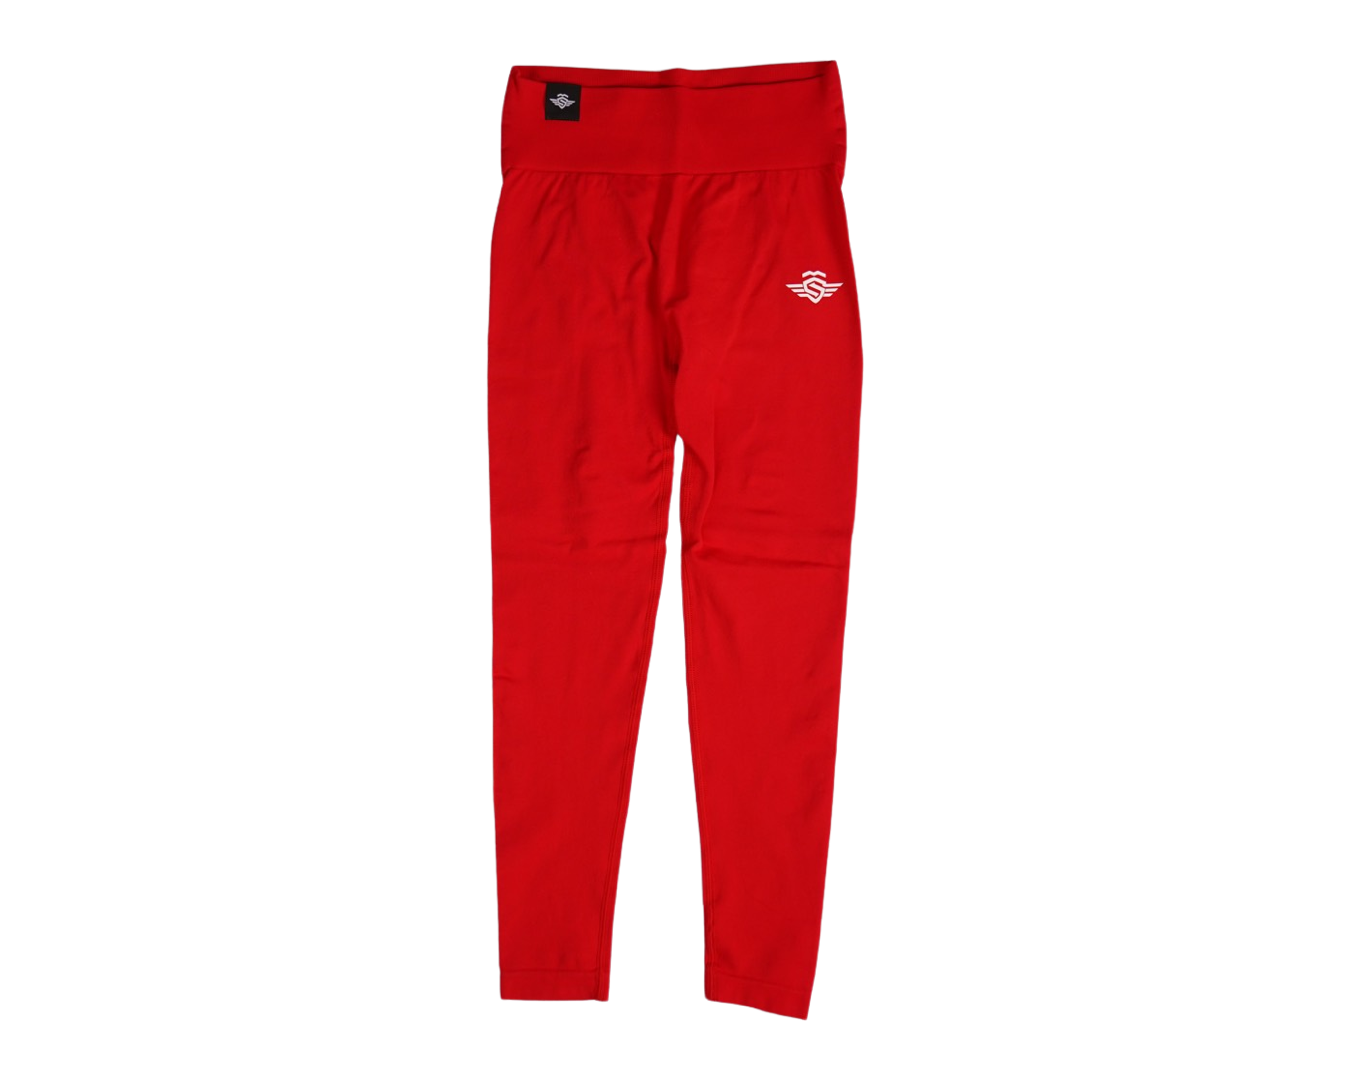 Solid red scrunch leggings 